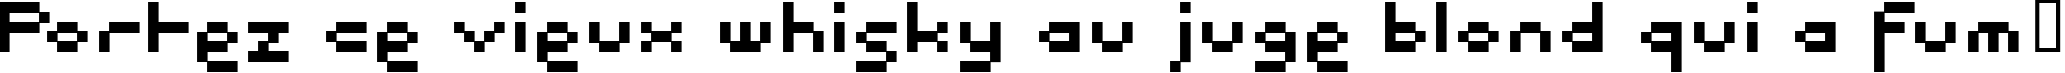 Пример написания шрифтом Pixel текста на французском